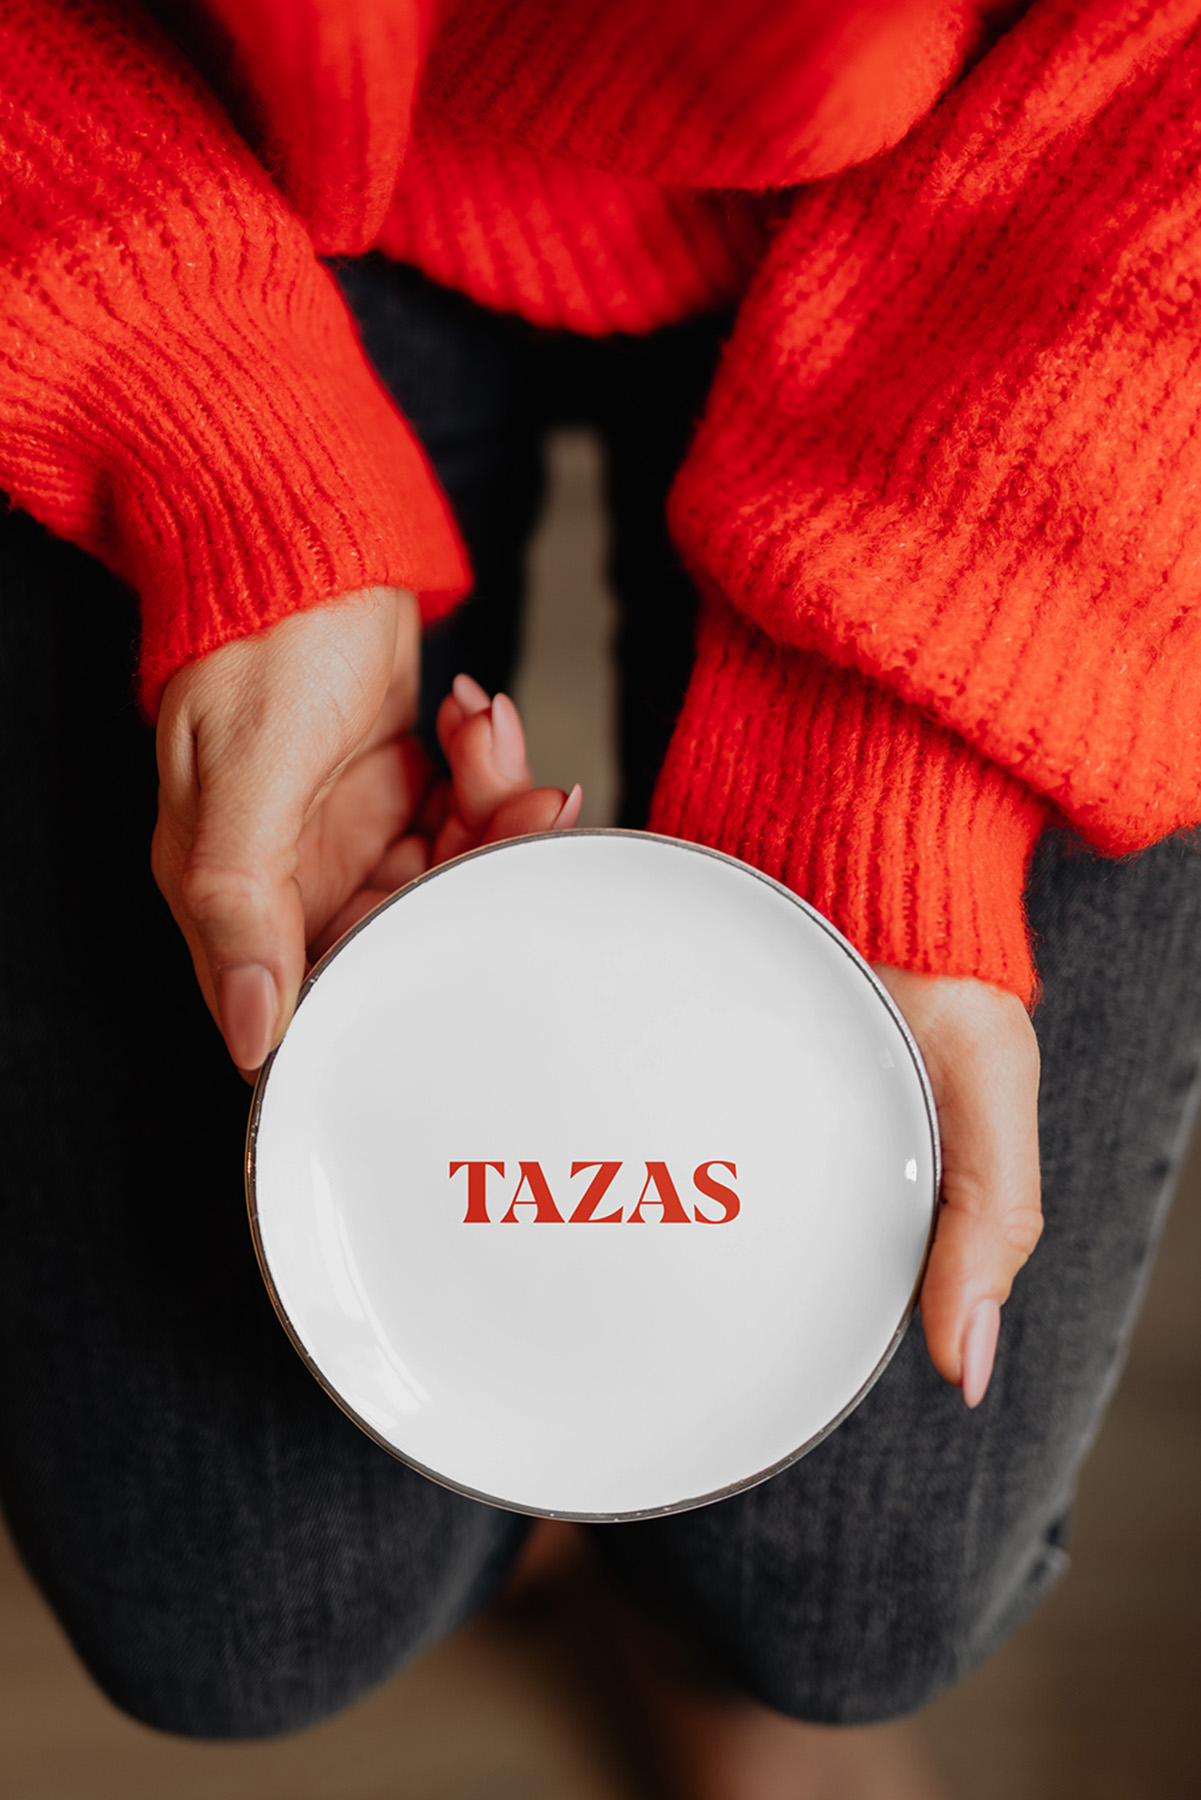 tazas-decorative-plate